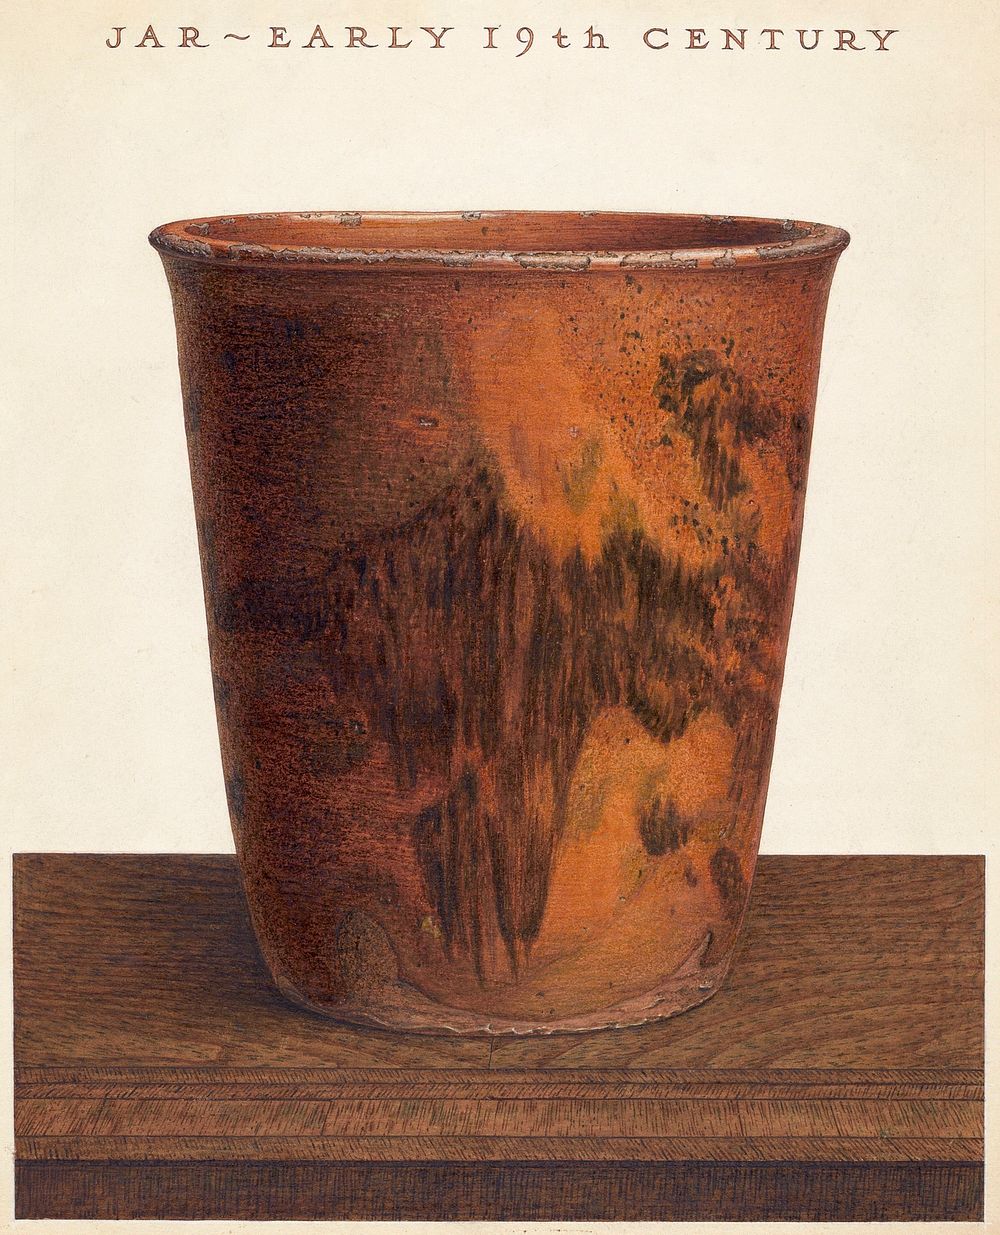 Jar (ca.1937) by John Matulis. Original from The National Gallery of Art. Digitally enhanced by rawpixel.